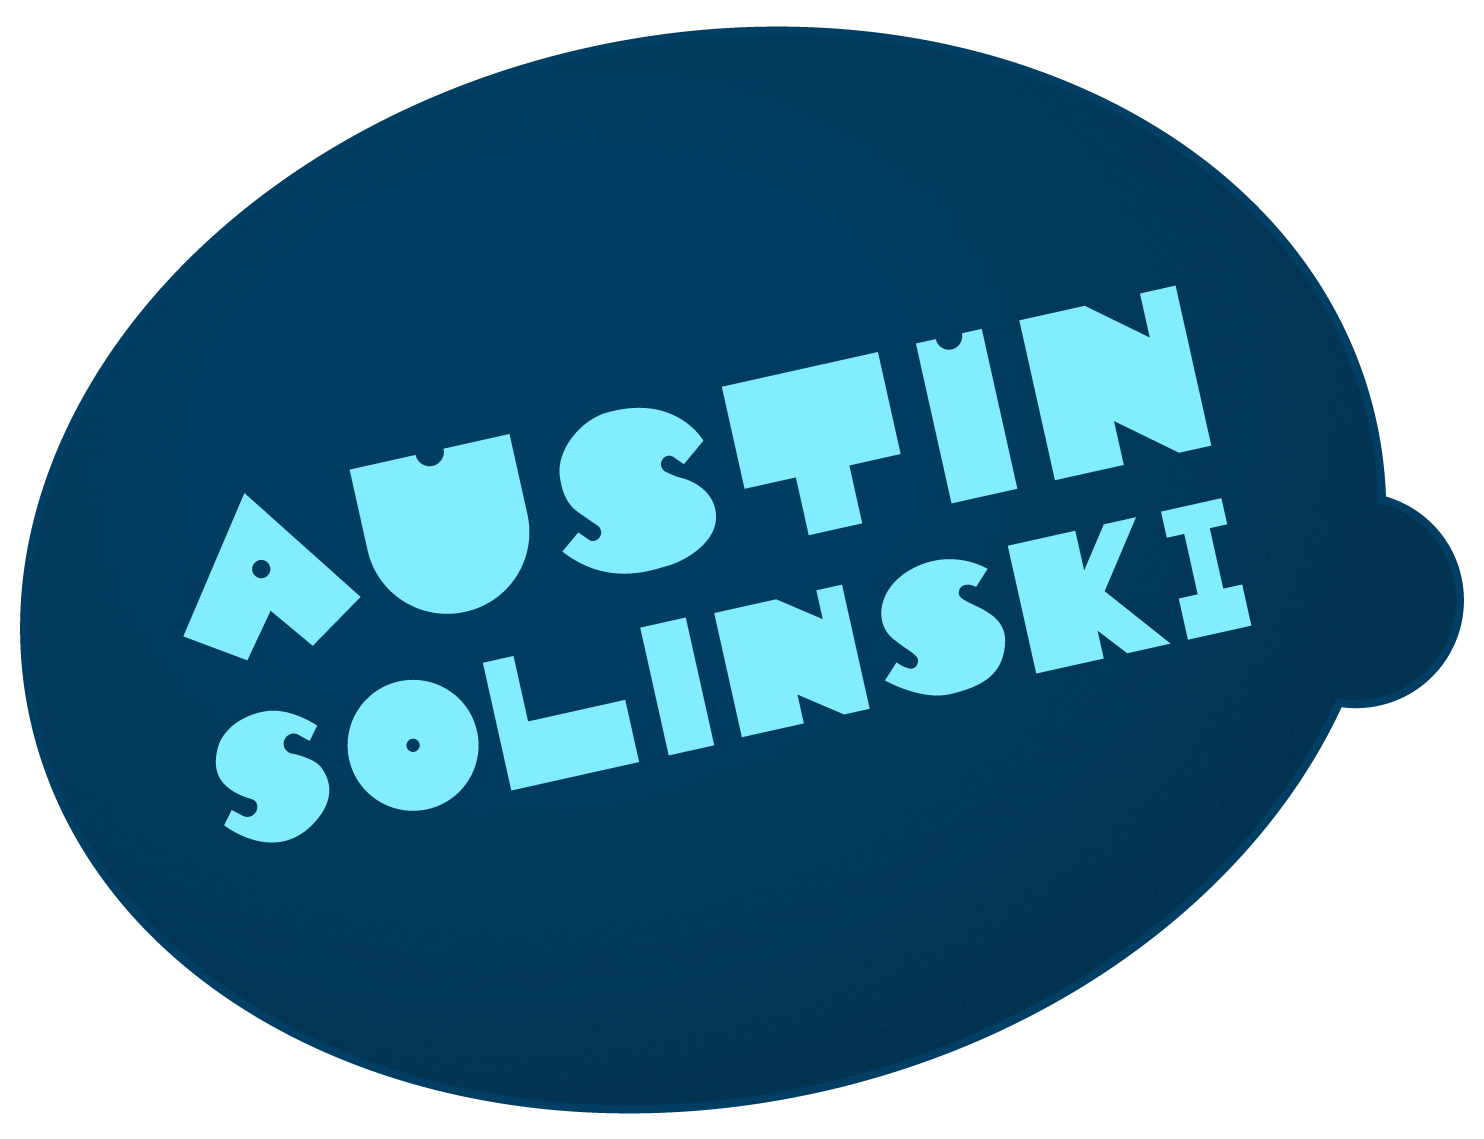 Austin Solinski